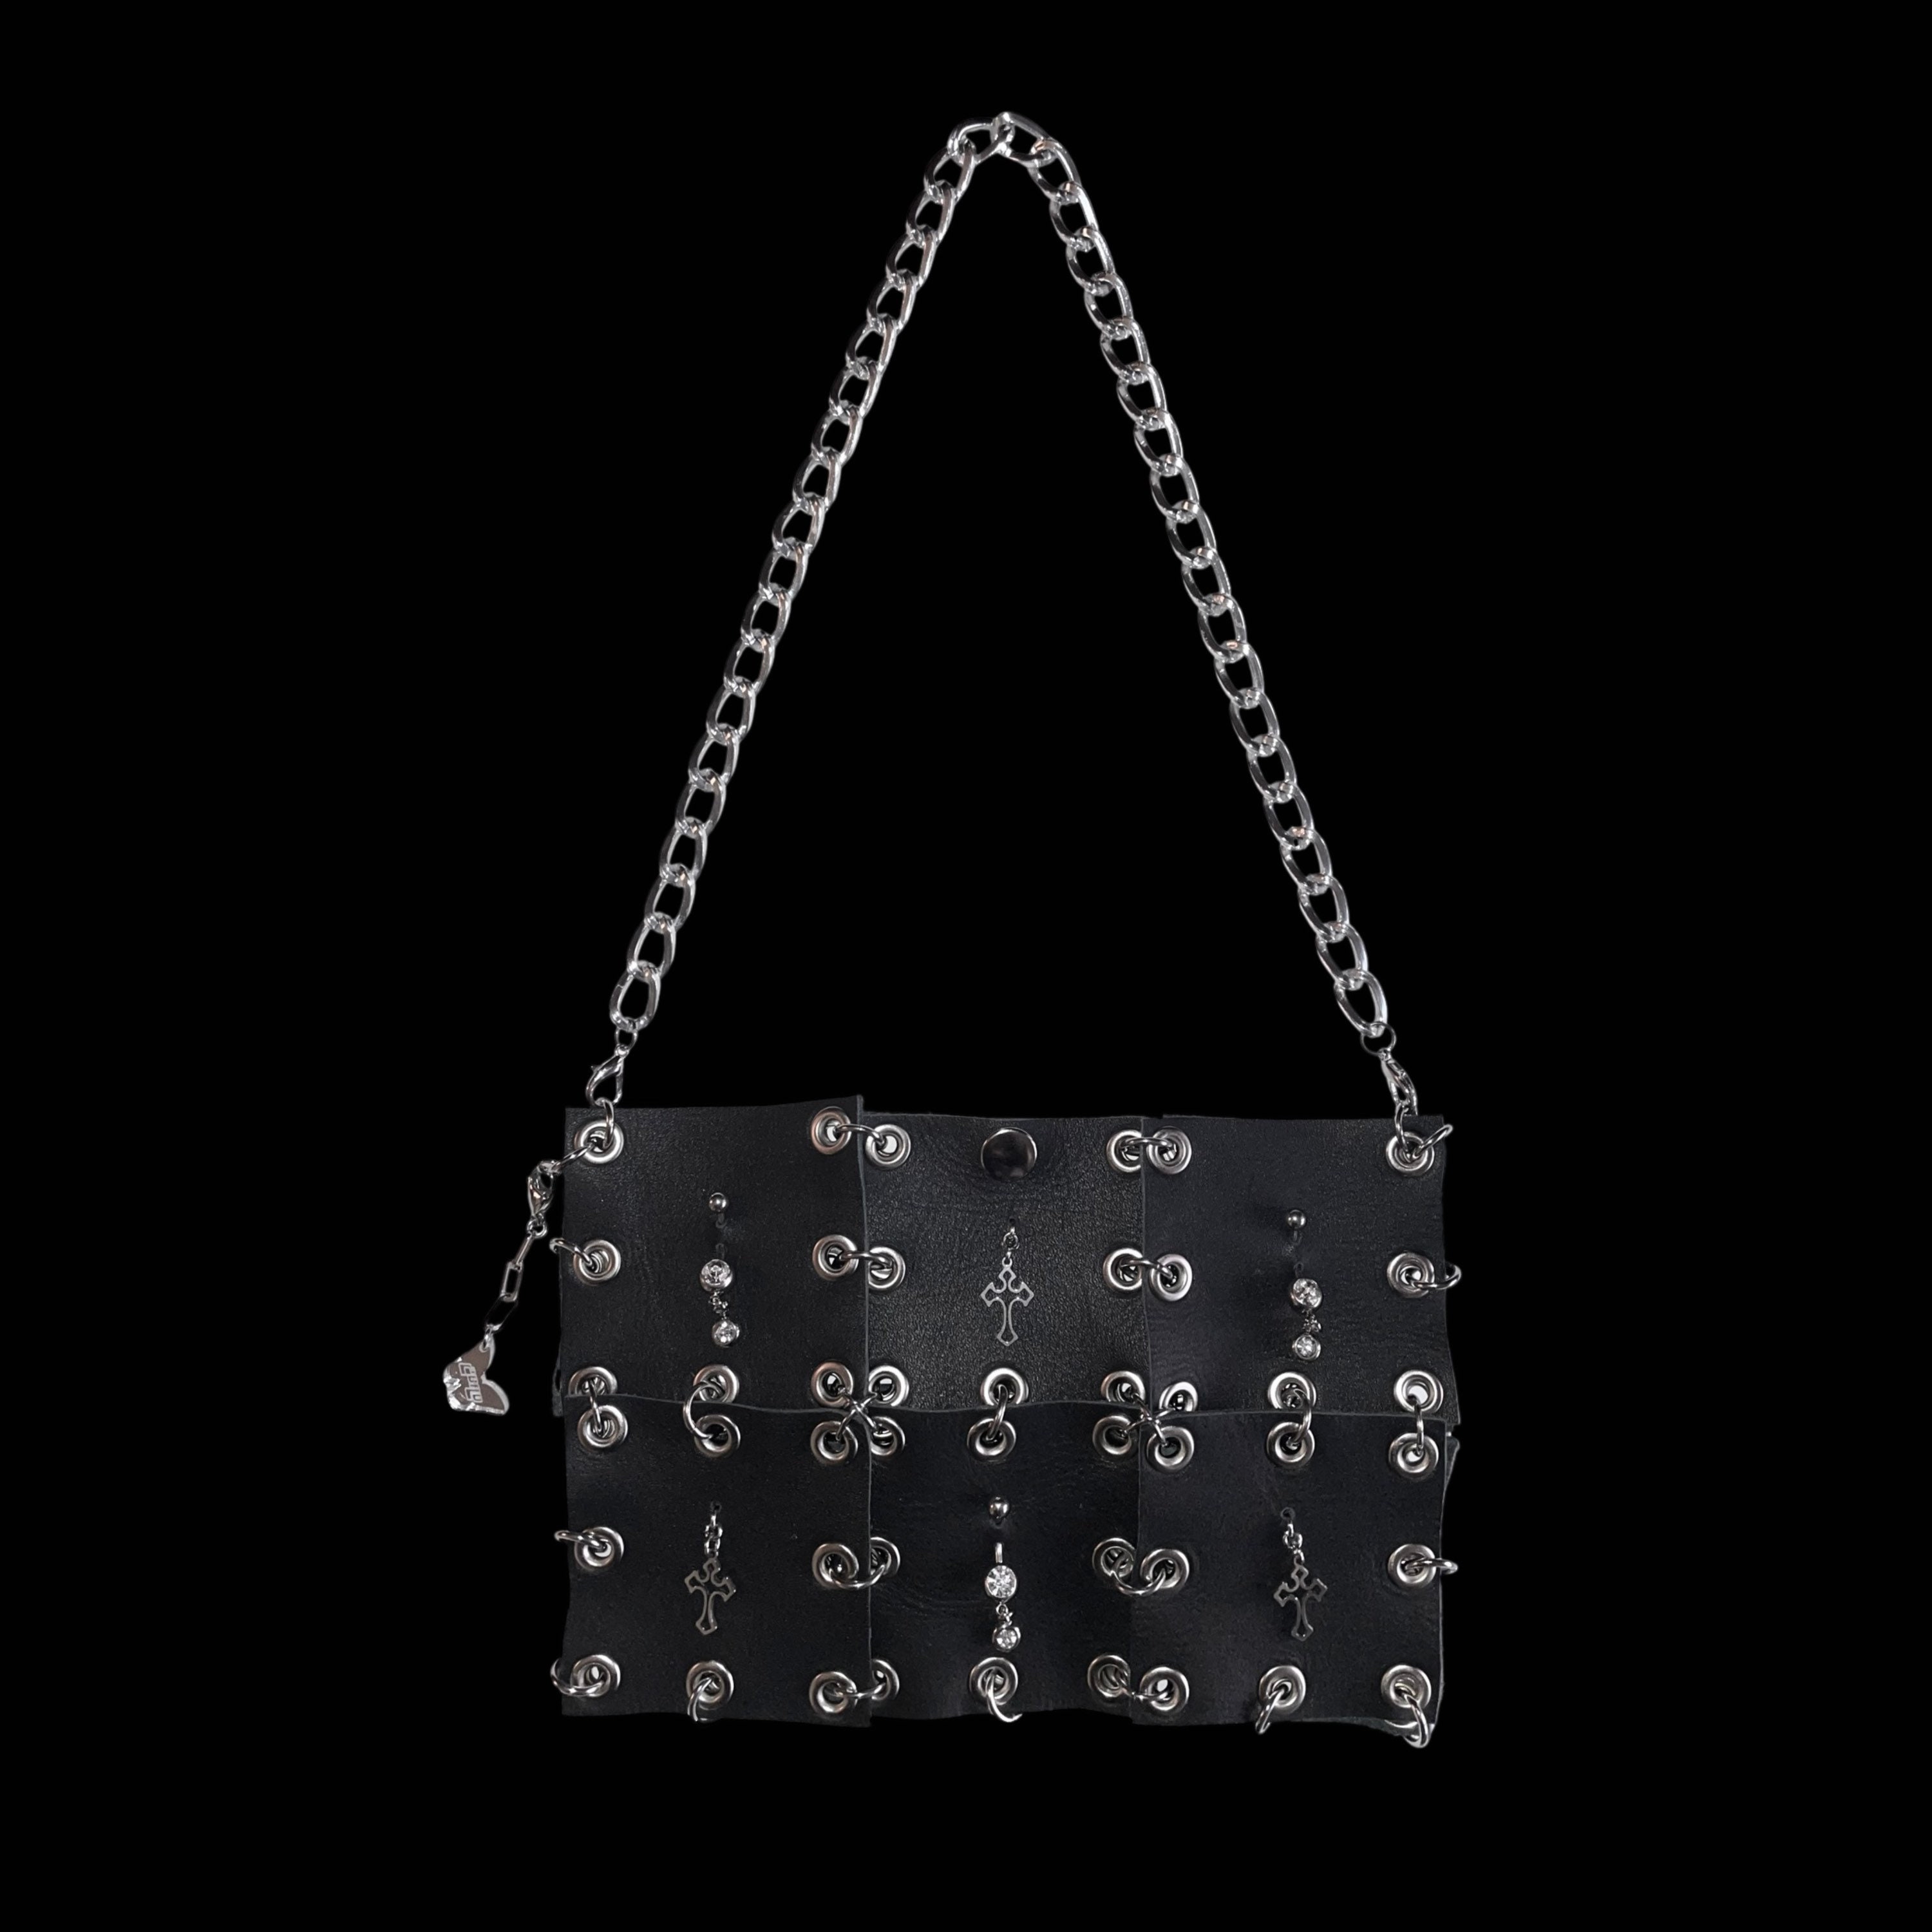 BATCAT Black Sling Bag Allover Rhinestone Decor Square Bag With